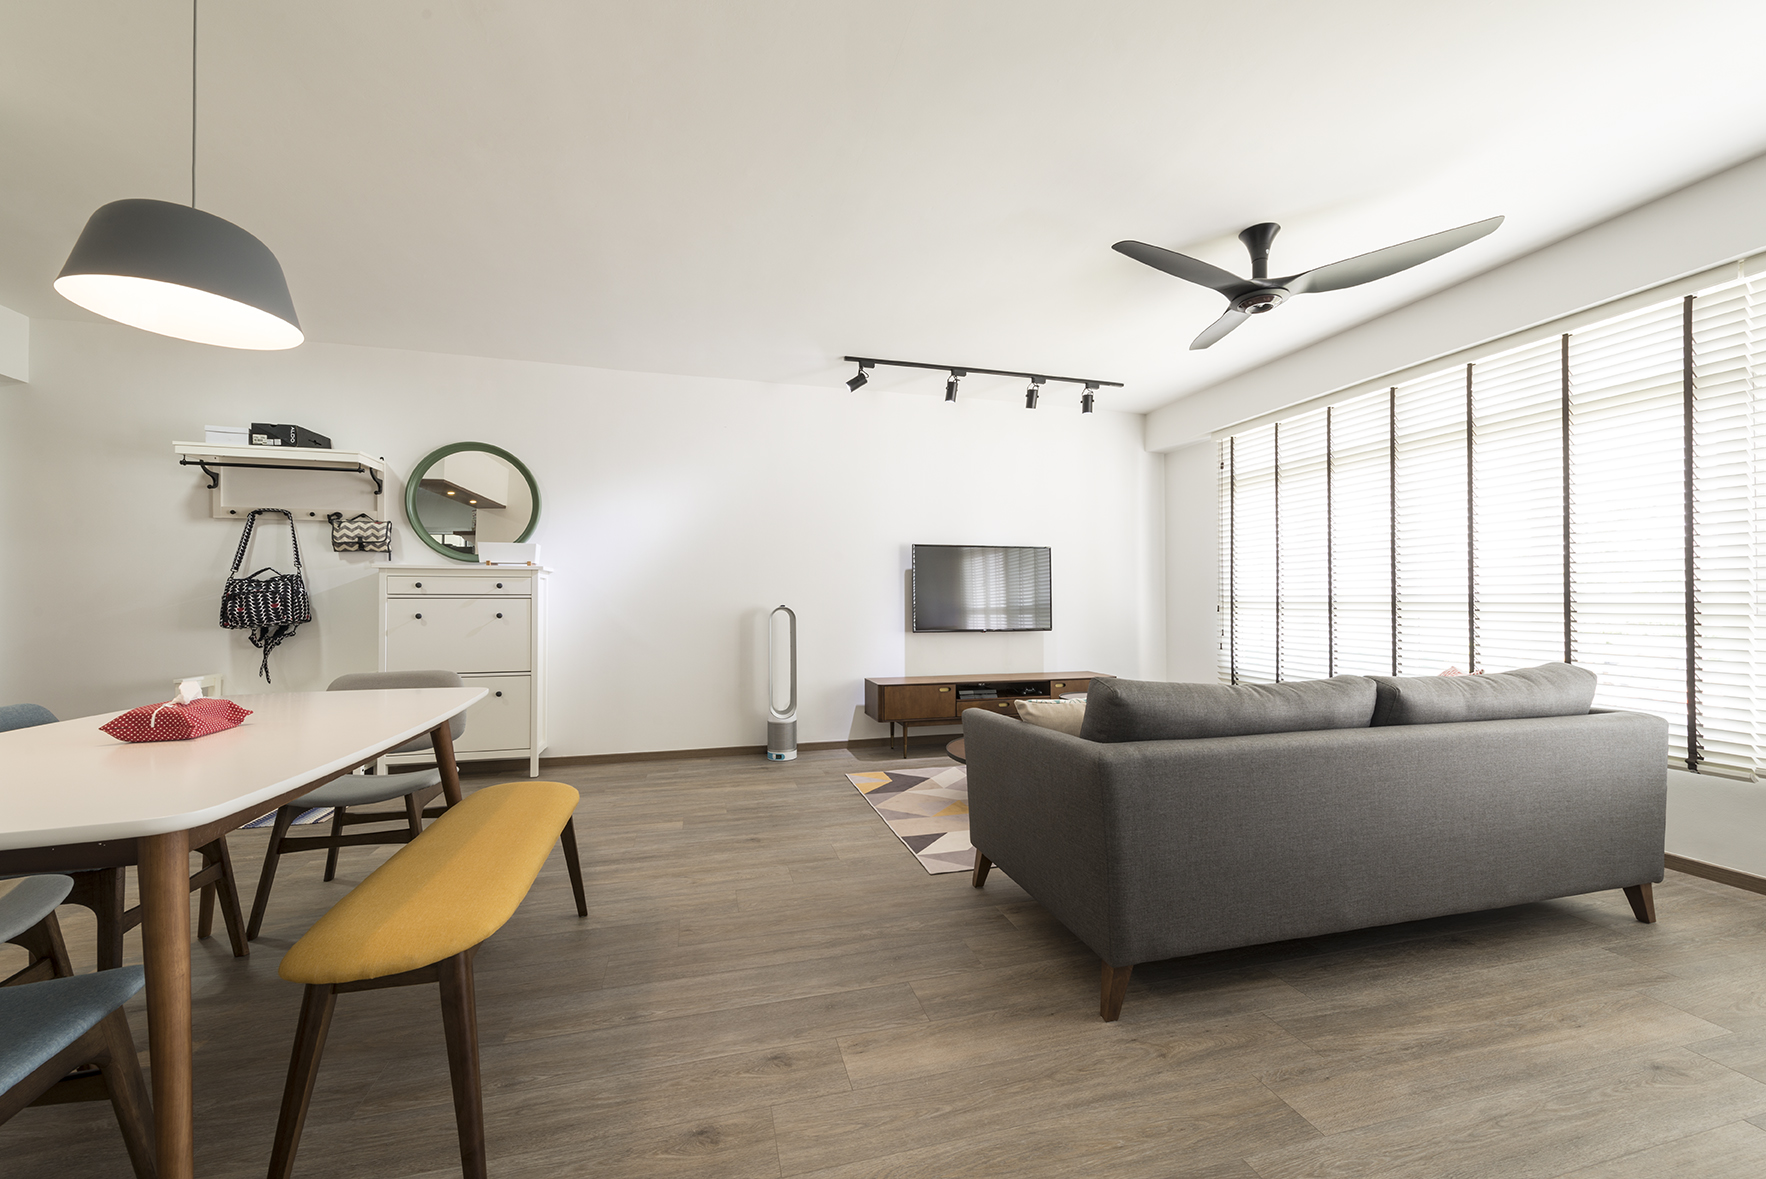 Country, Minimalist, Rustic Design - Living Room - HDB 5 Room - Design by TBG Interior Design